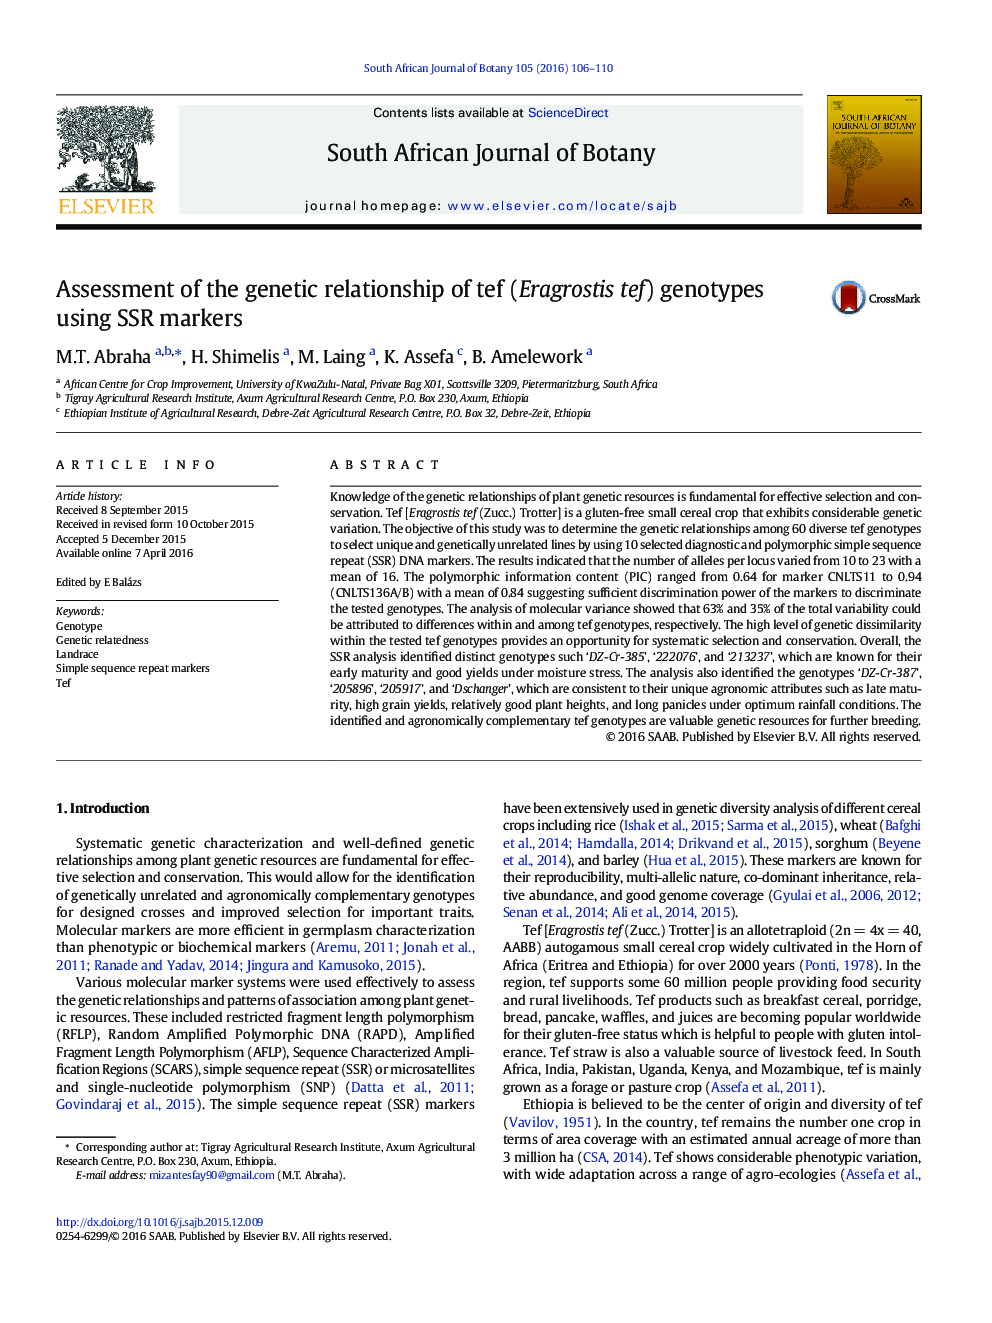 Assessment of the genetic relationship of tef (Eragrostis tef) genotypes using SSR markers